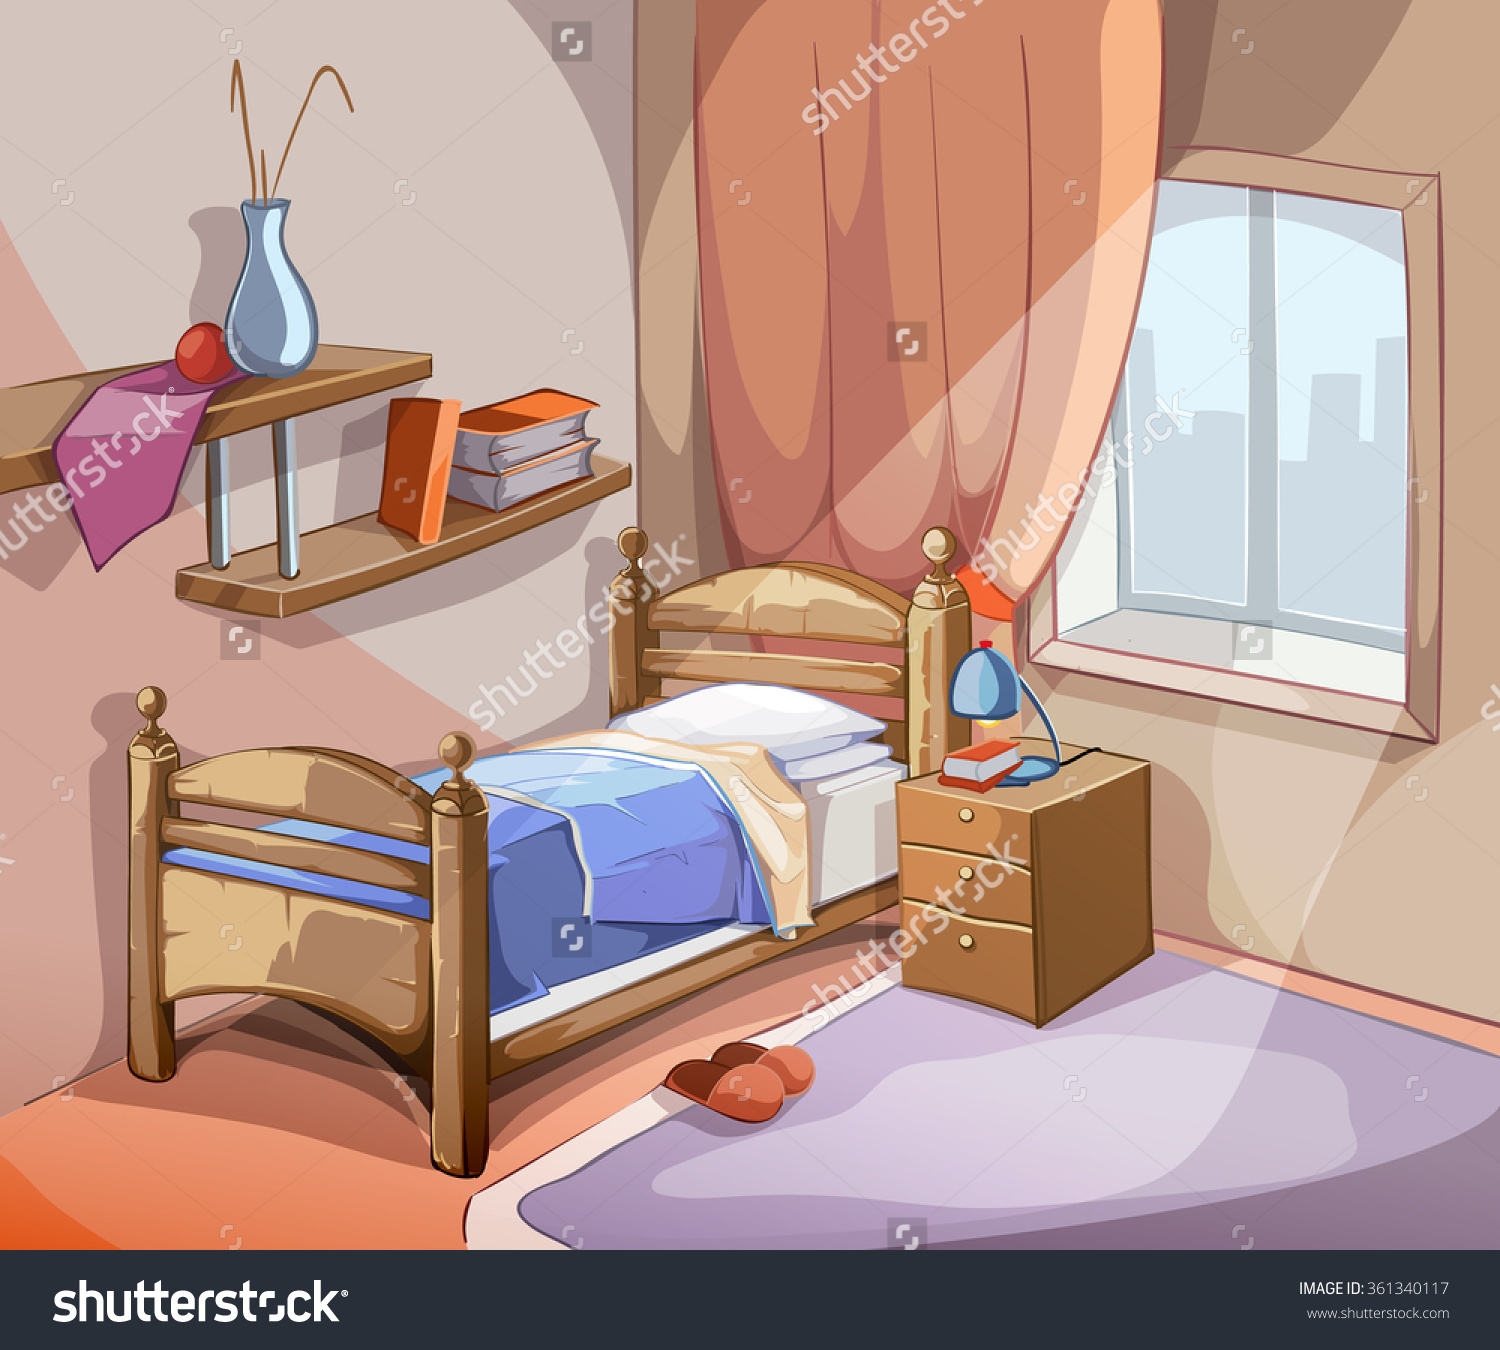 Organized clipart organized bedroom. Bed cartoon bedrooms 